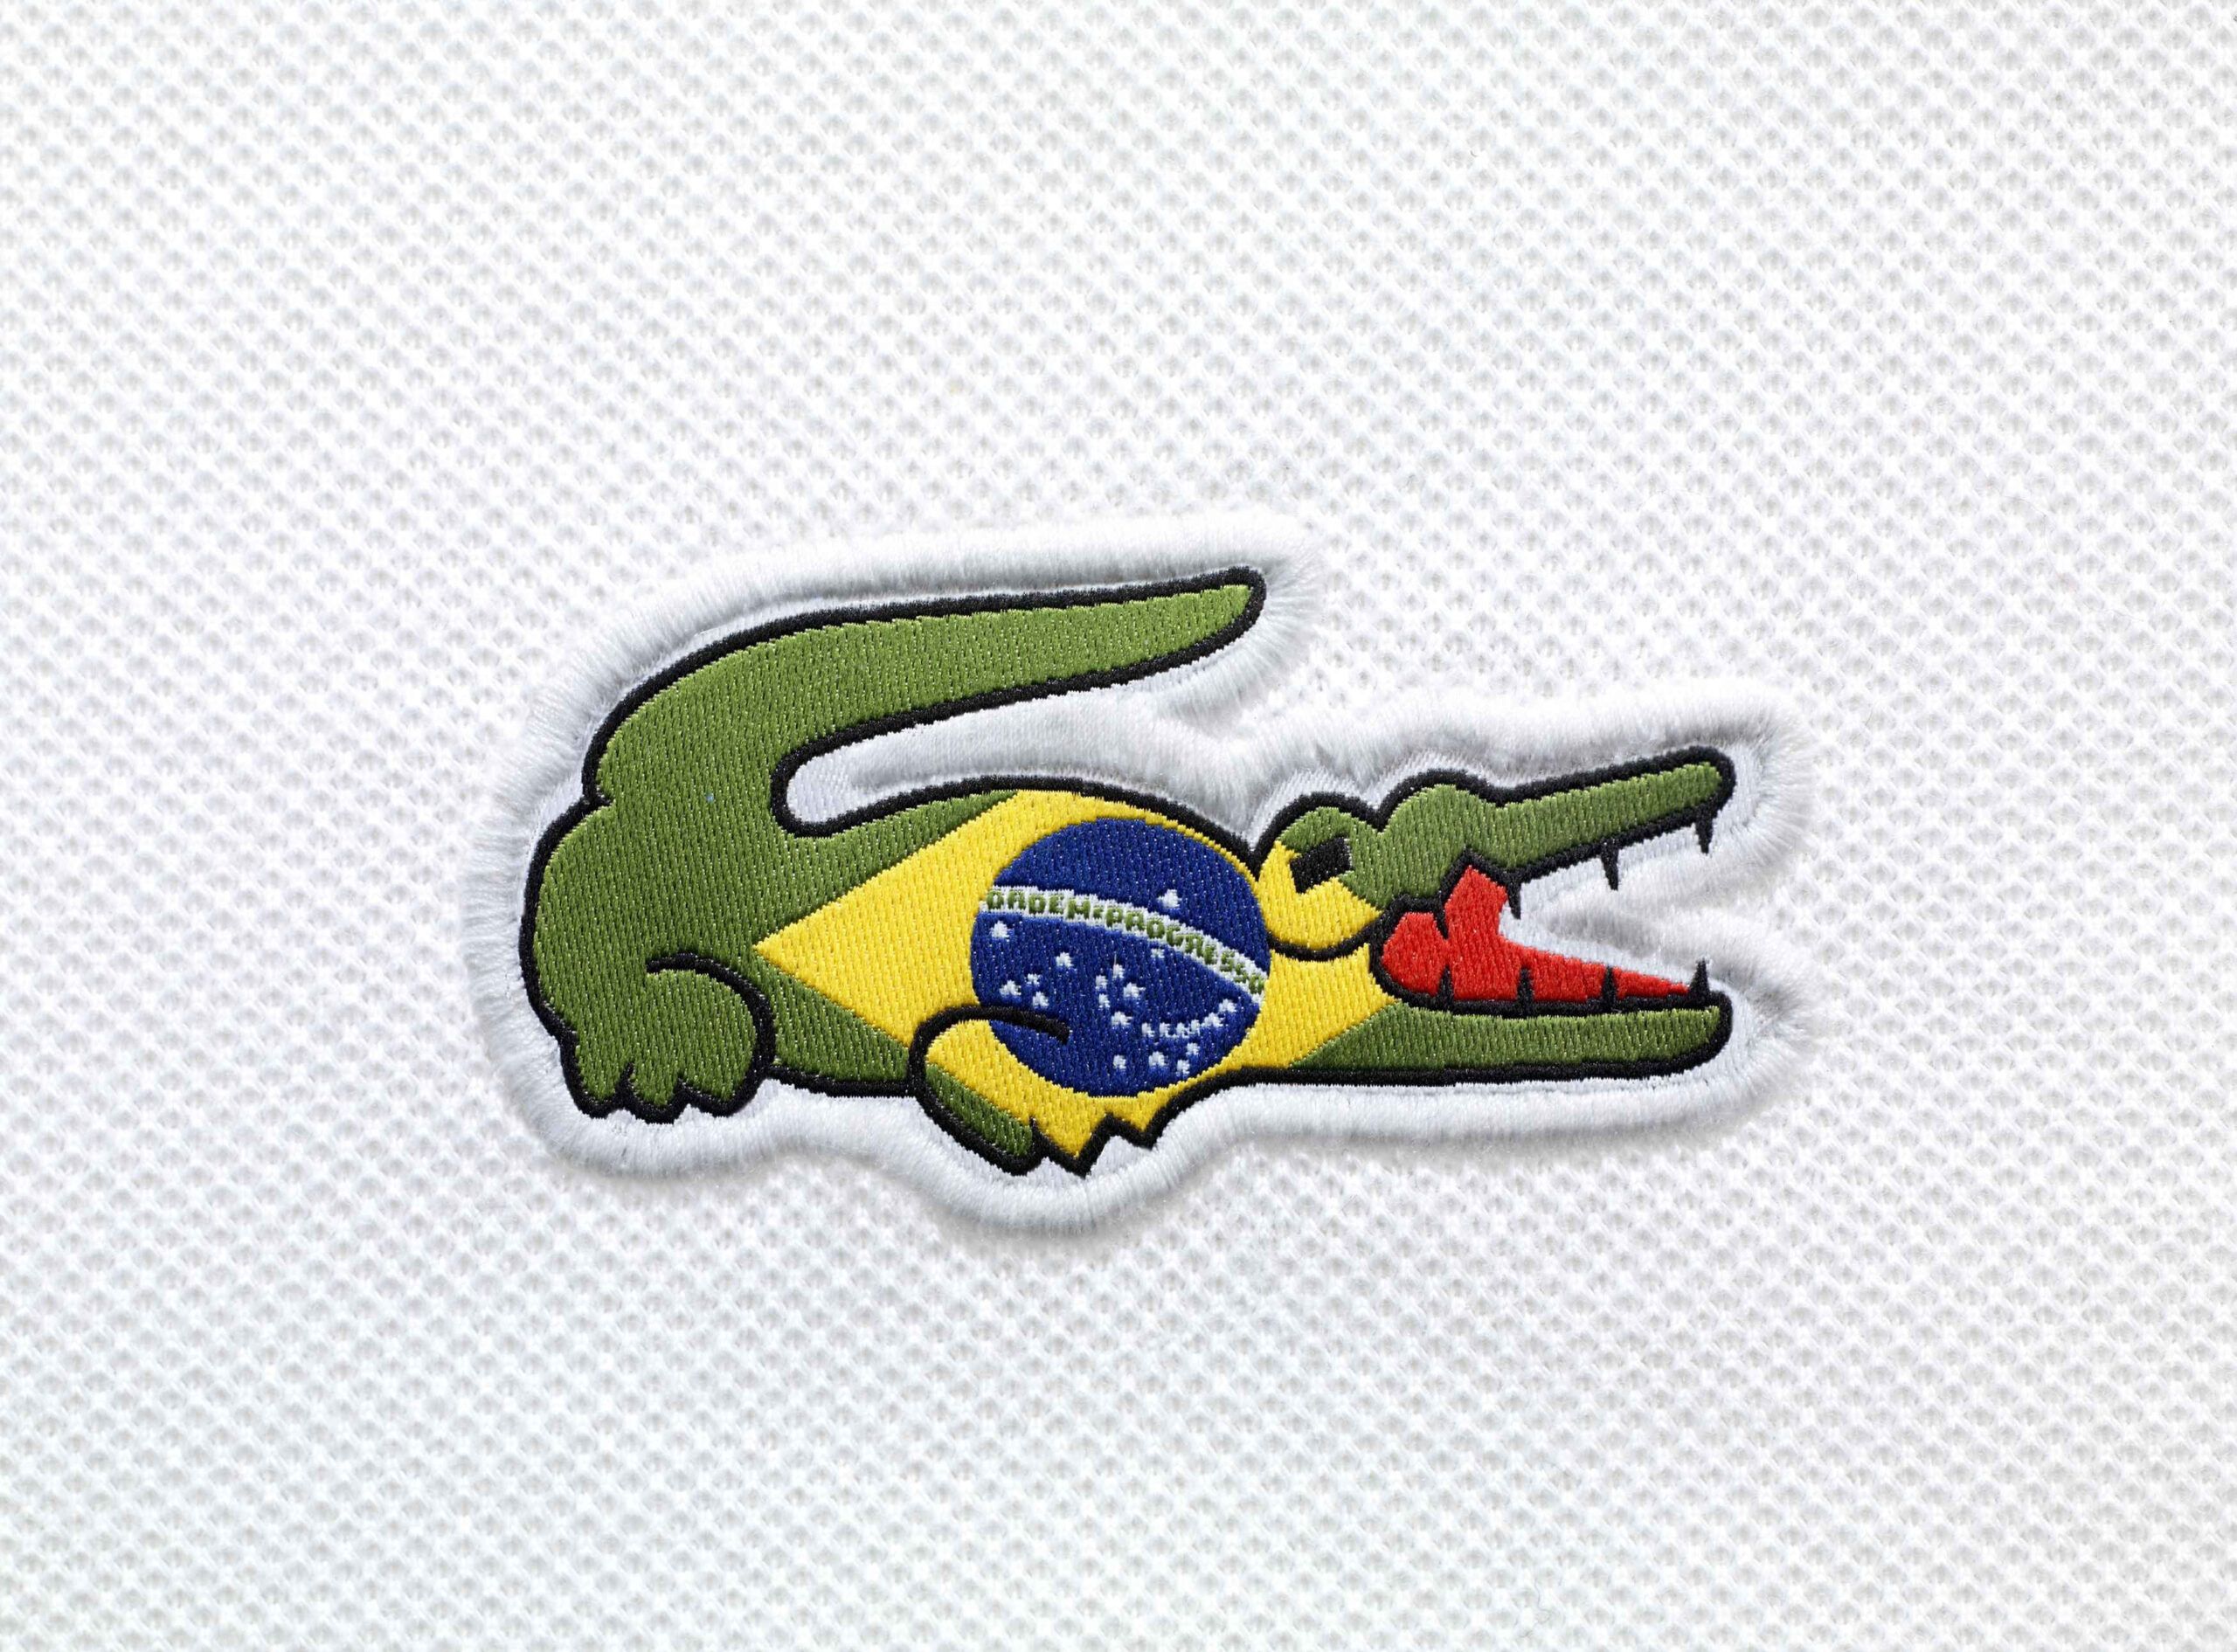 Wallpaper Misc, Flag Of Brazil, Crocodile, Lacoste, Lacoste Wallpaper, Other